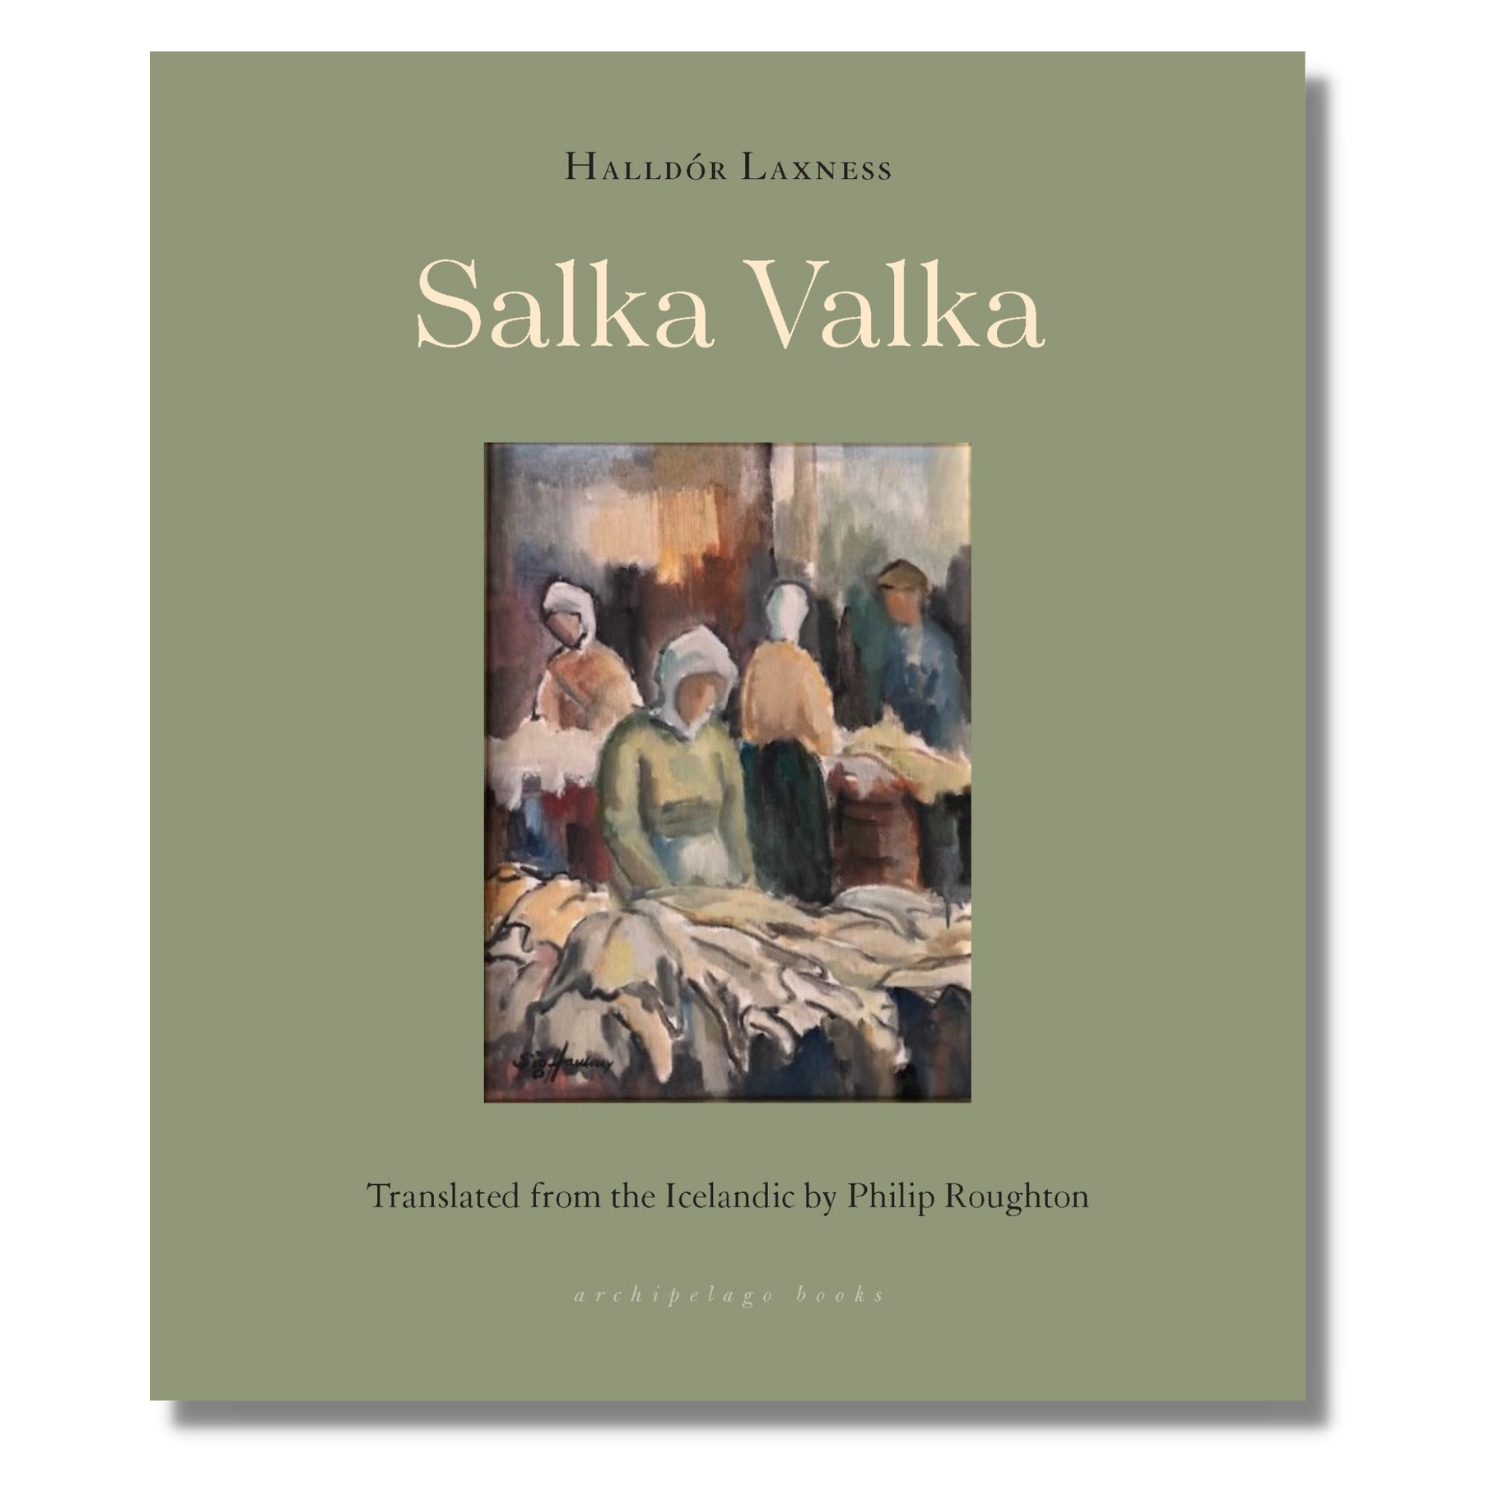 The cover of "Salka Valka"